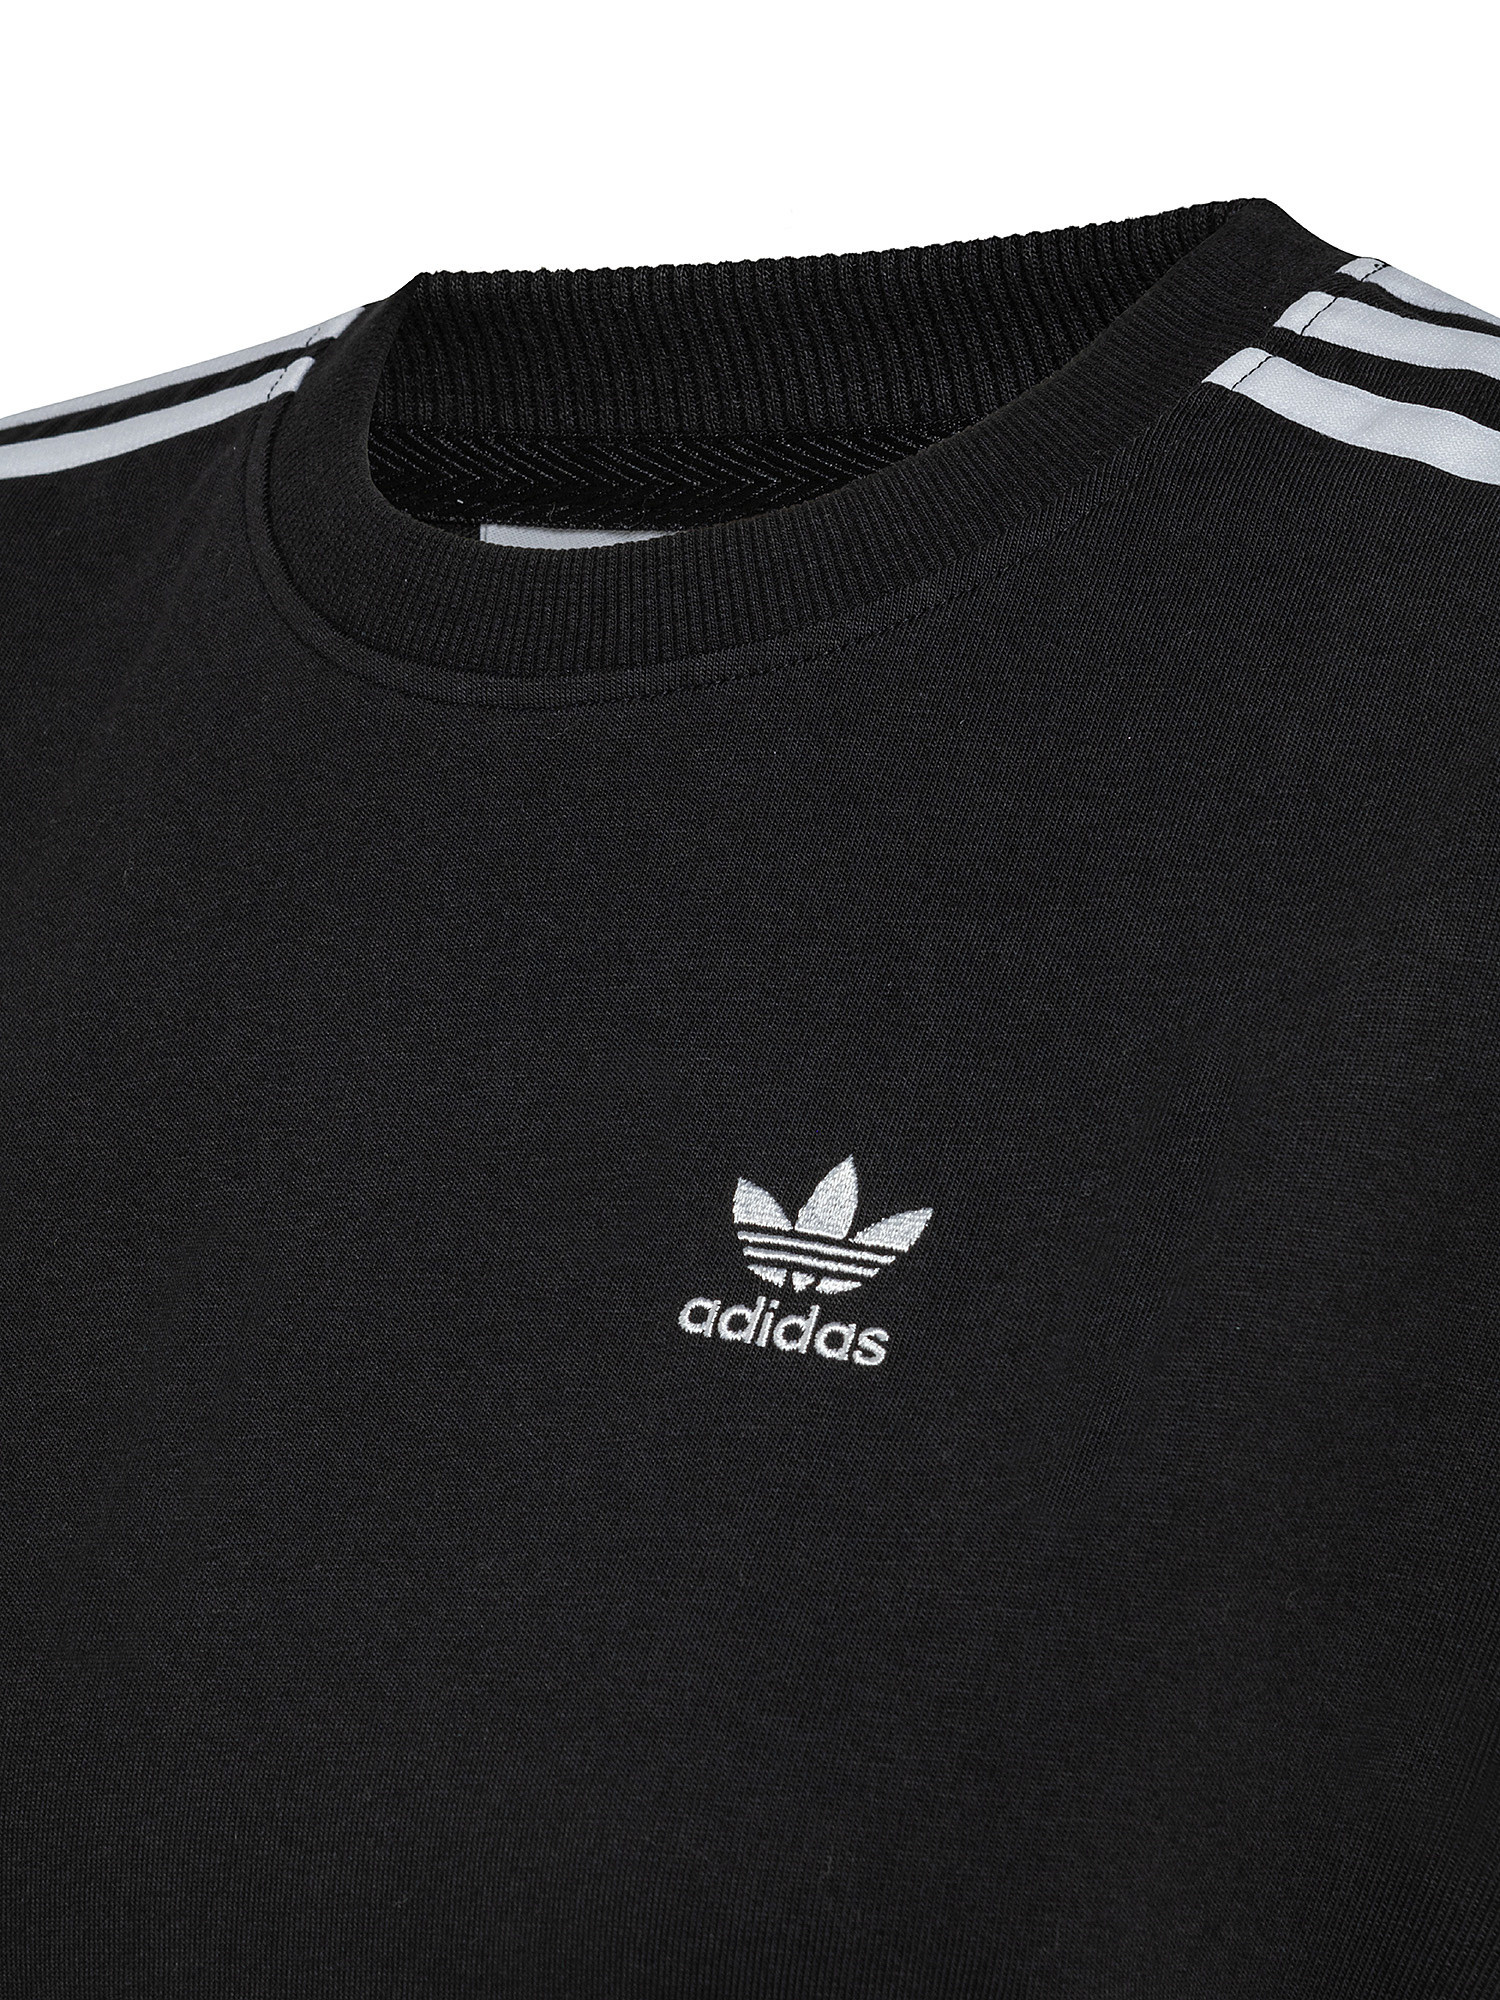 Adidas - T-shirt adicolor con logo, Nero, large image number 2